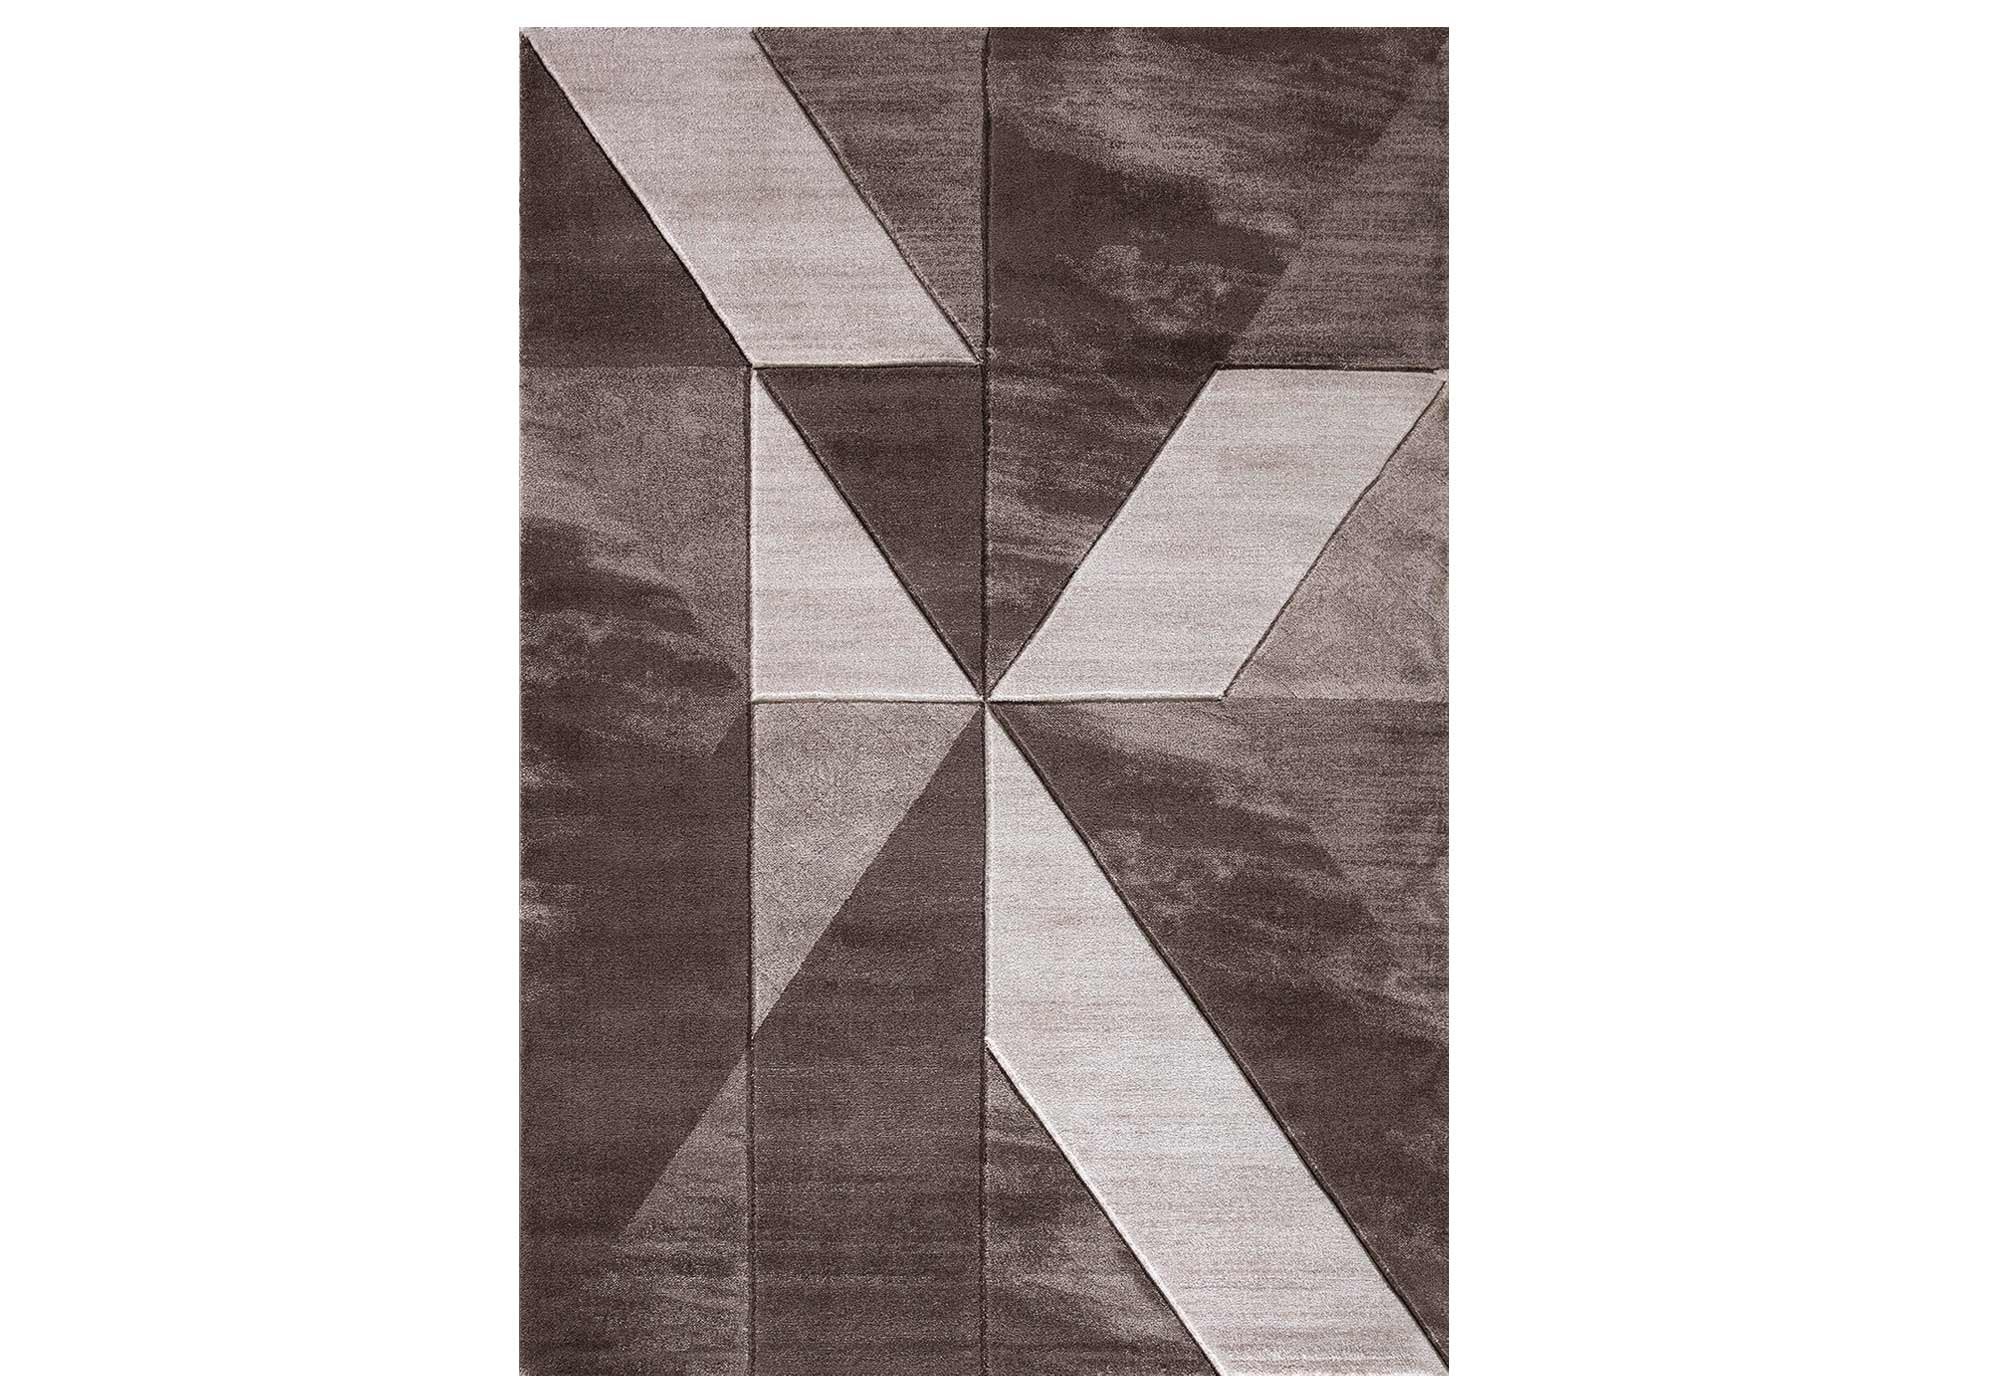 Festival Teppich 80 x 150 cm - beige - 11 mm Höhe - Konturenschnitt - Relax 210